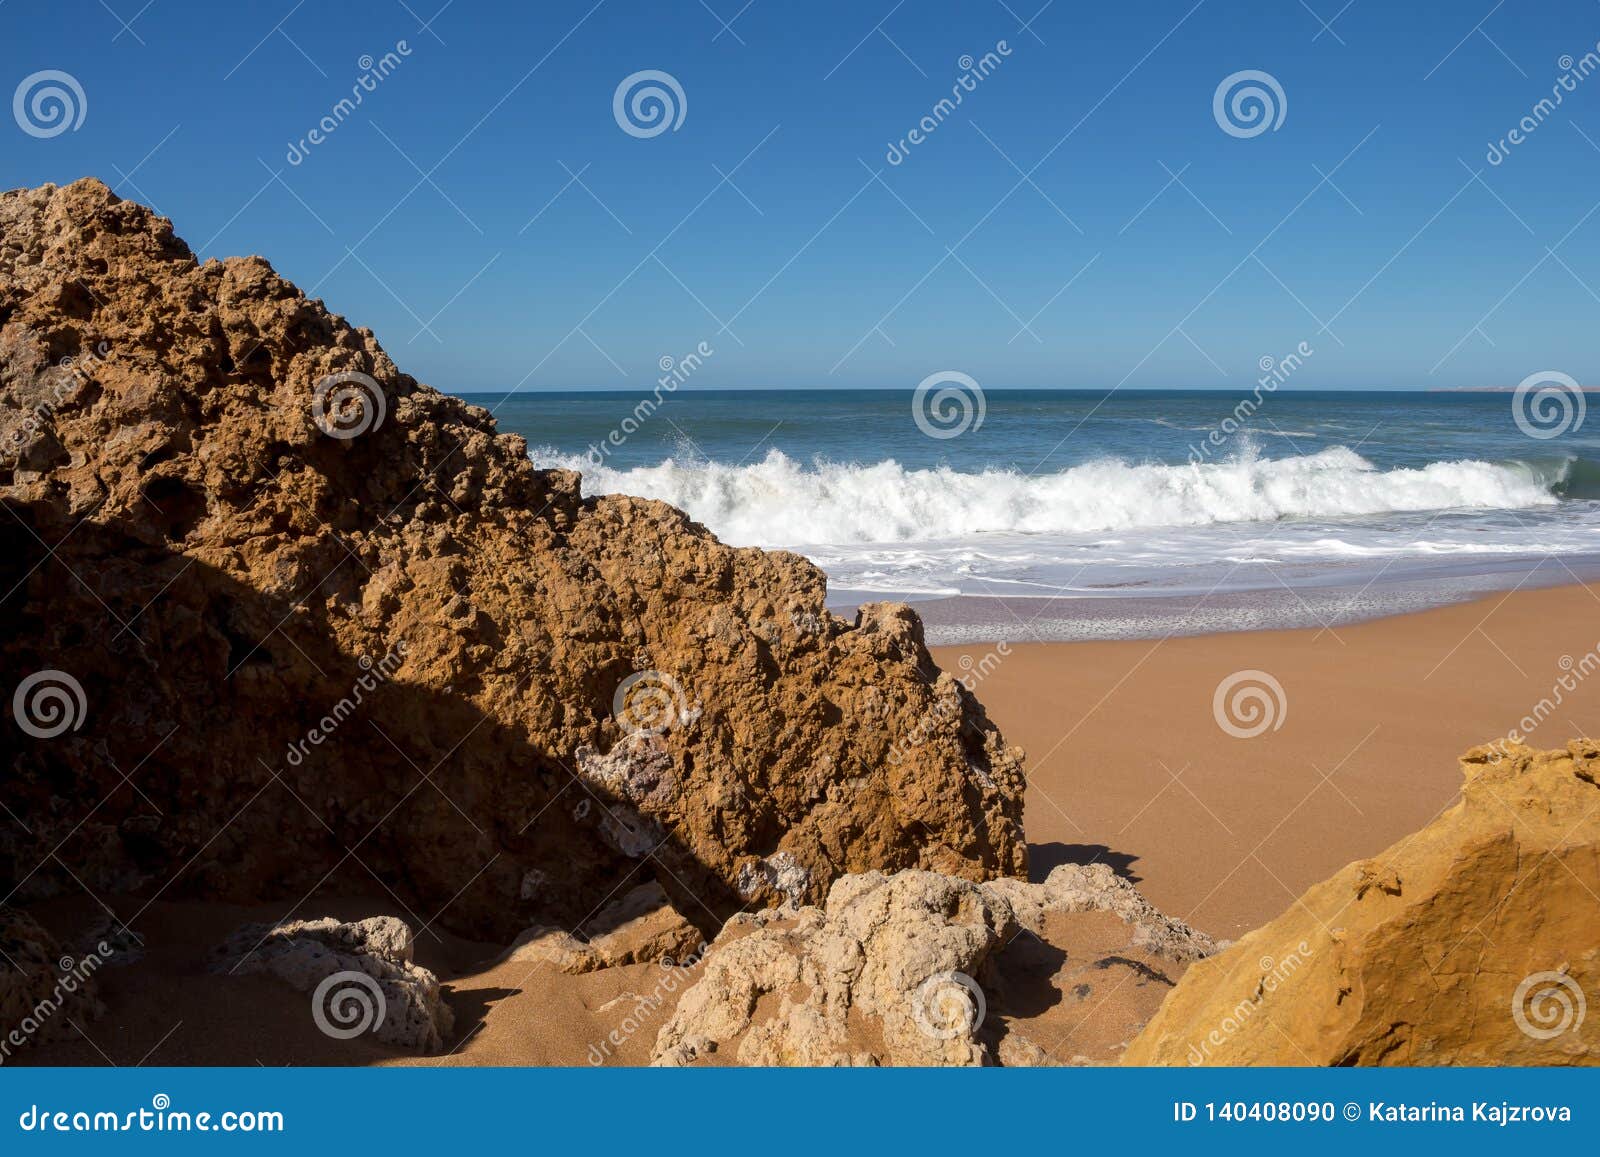 rocks sandy beach lalla fatna morocco clean dark yellow sand foamy waves atlantic ocean horizon background clear 140408090